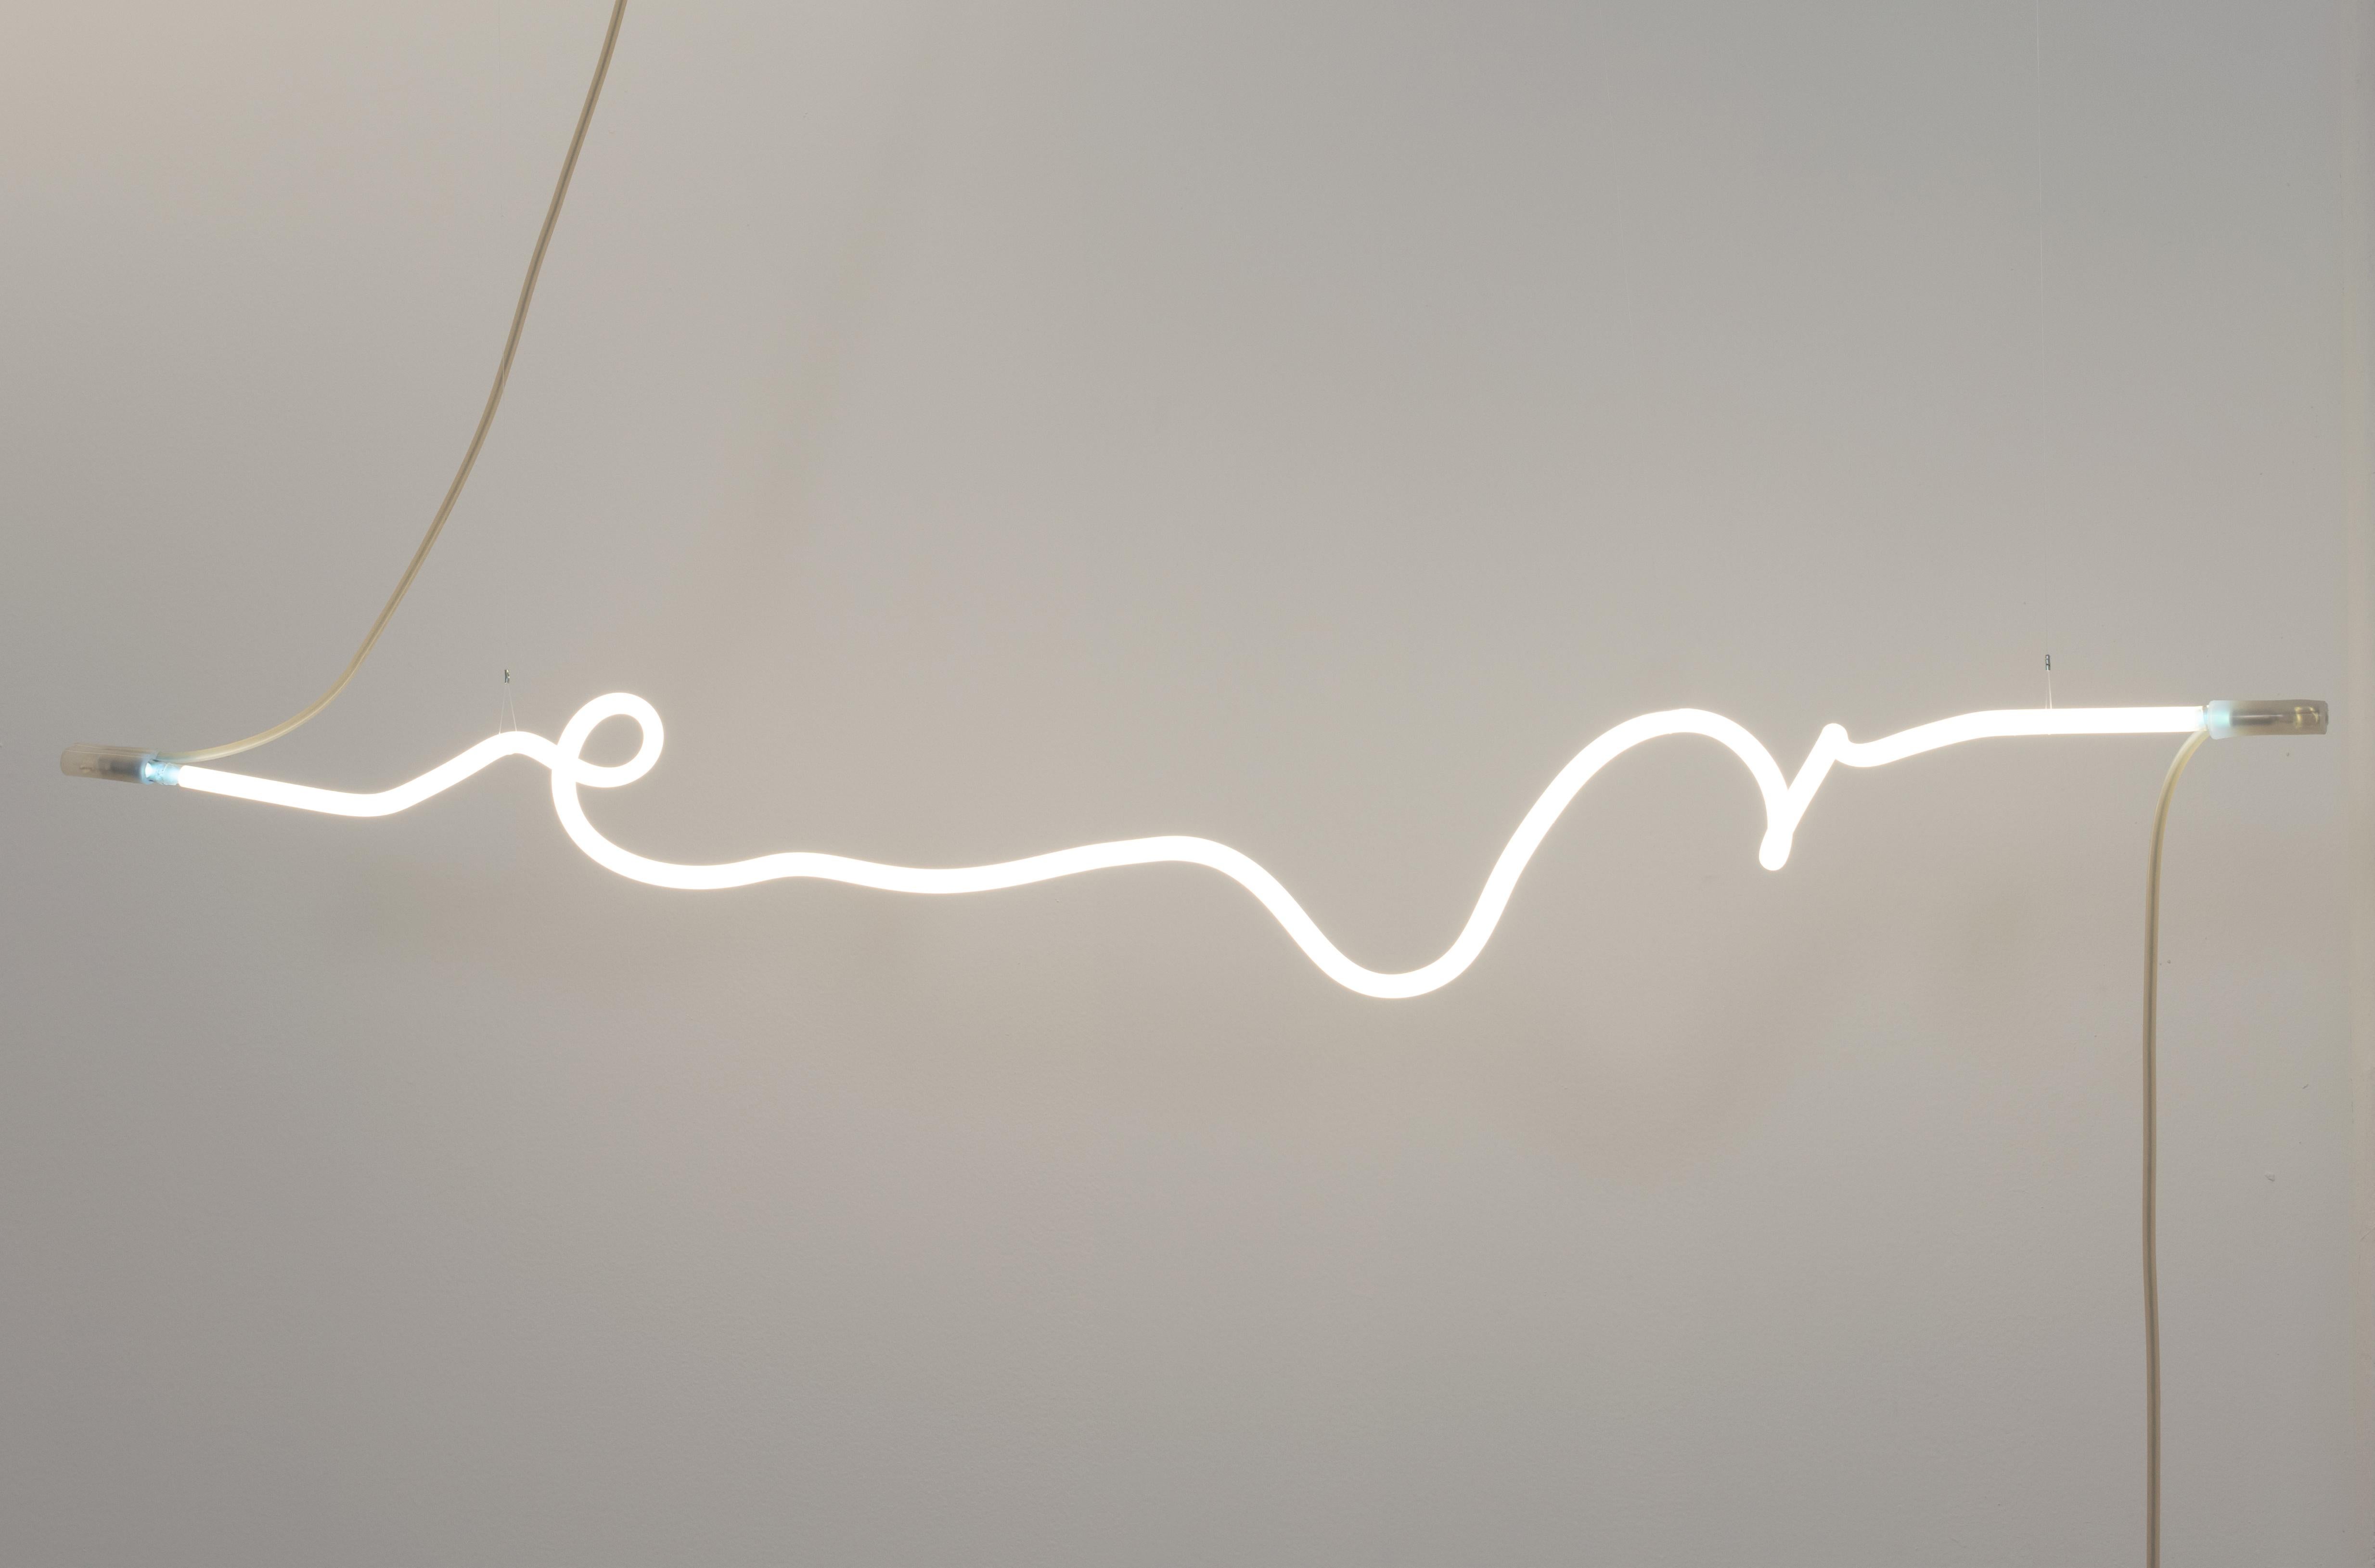 Annesta Le "Revealed 2" 2020 White Neon (coated glass, argon, wire) Minimal